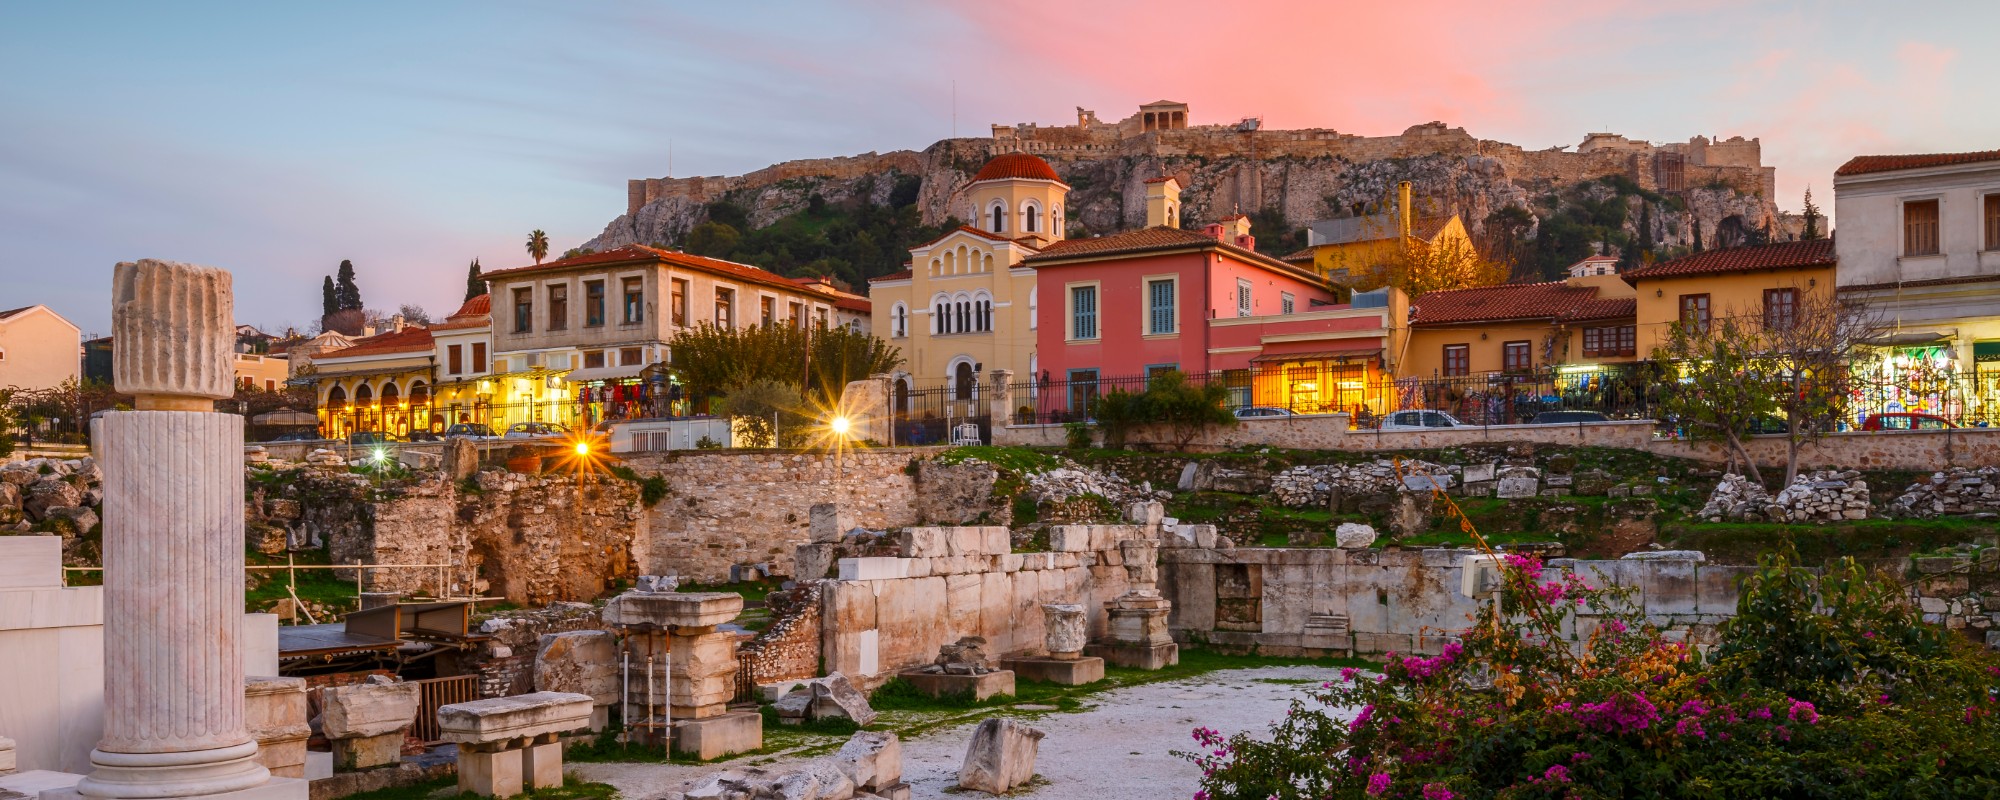 Athens - credits: Milan_Gonda/Shutterstock.com